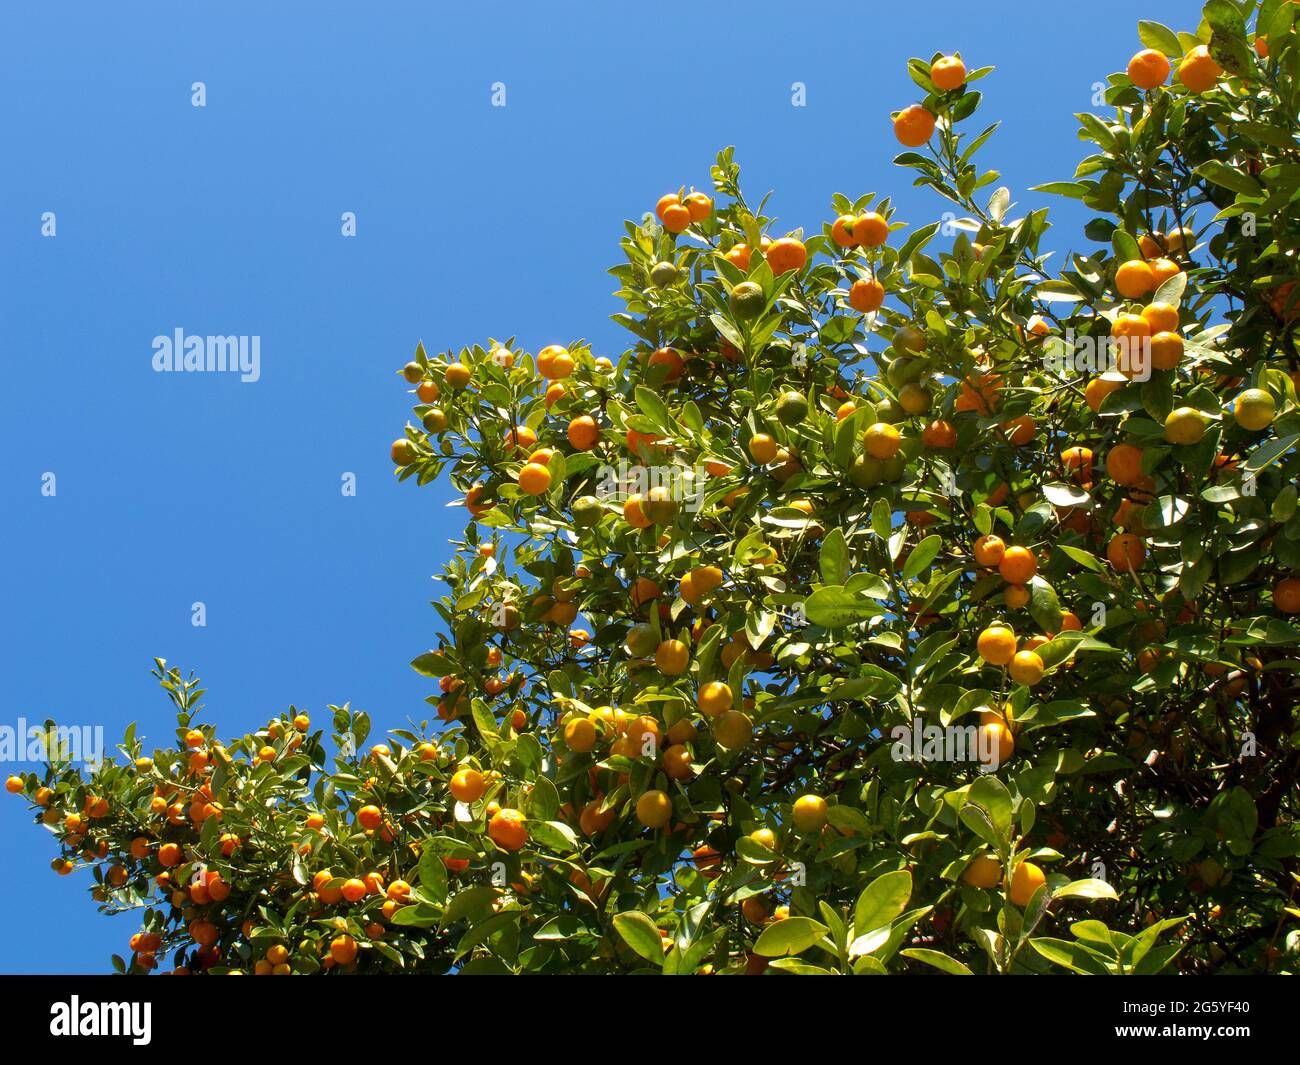 Citrus fruit grows on a tree. Stock Photo